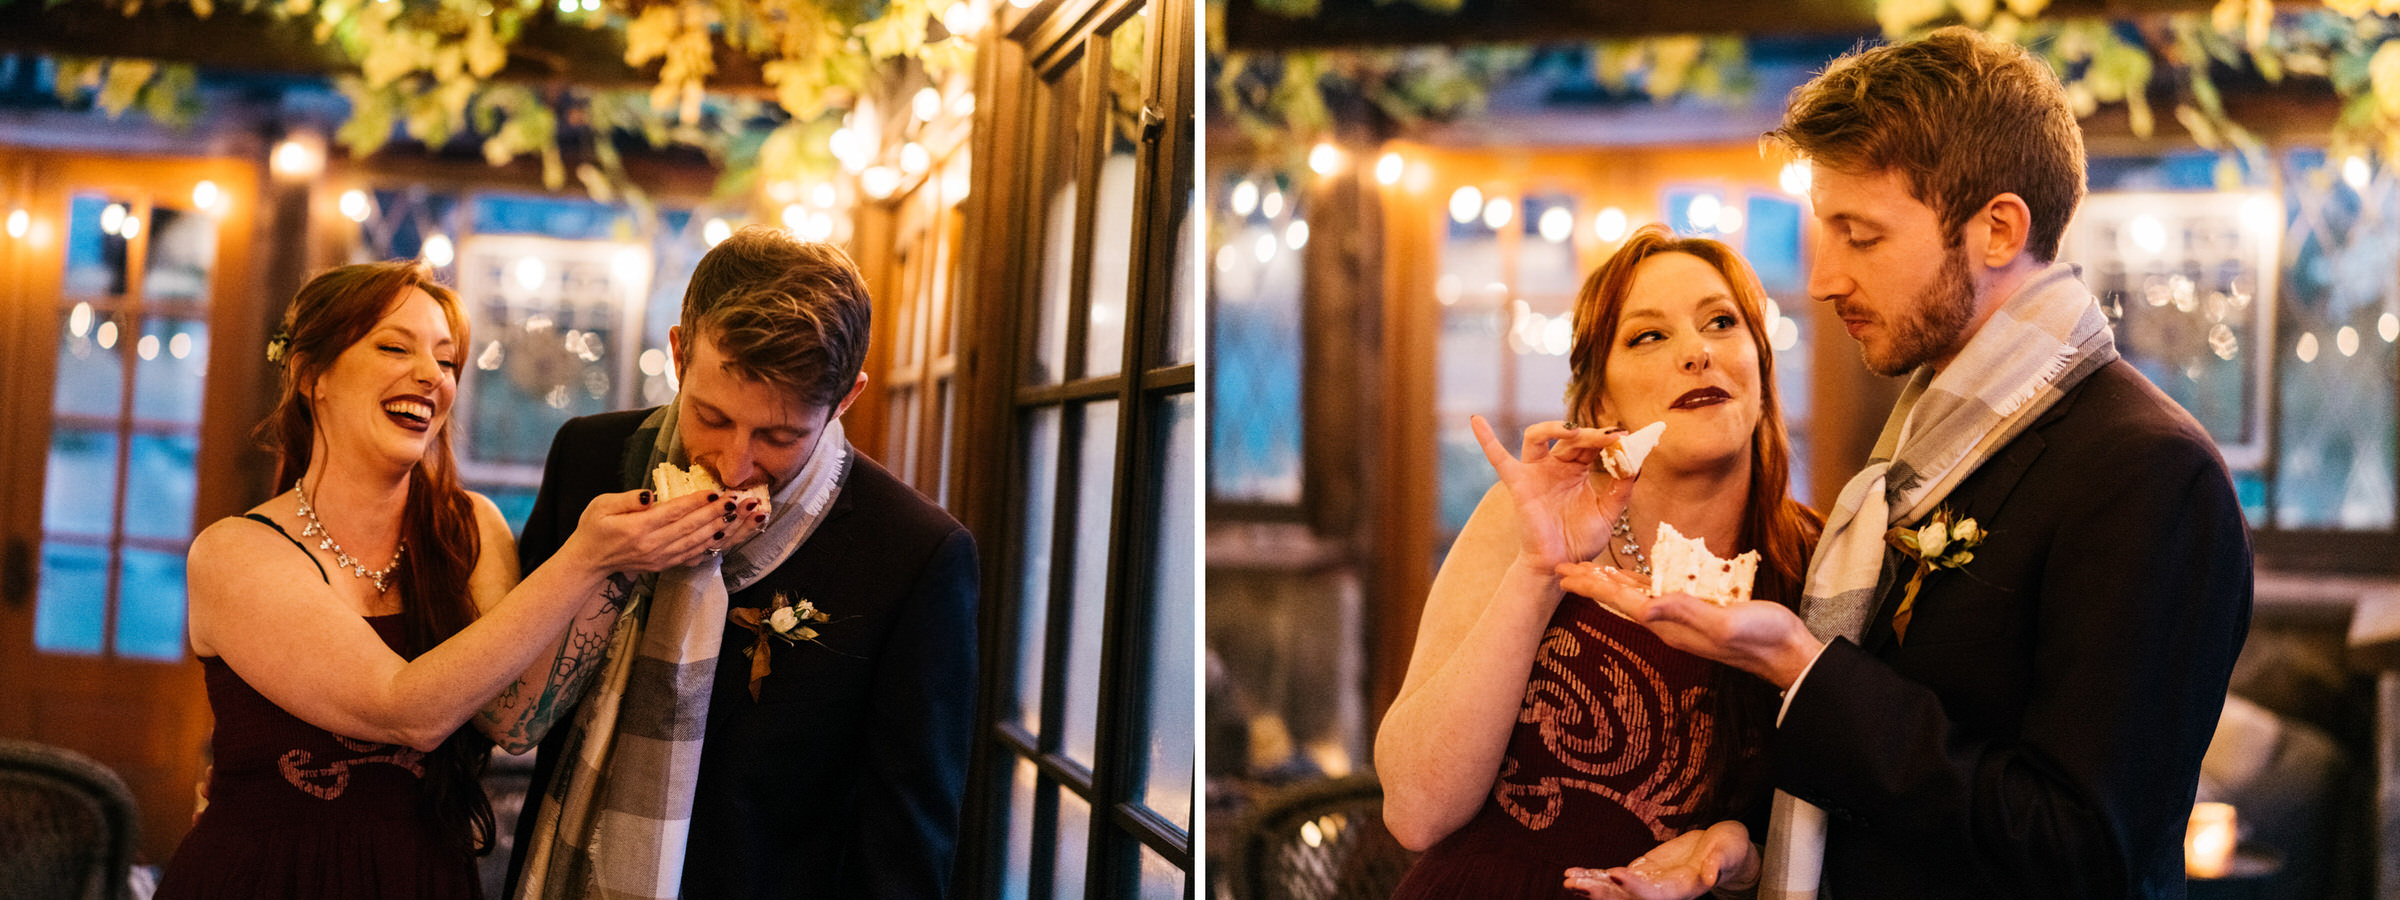 Seattle wedding photographers: Fall Wedding at Bella Luna Farms (4)